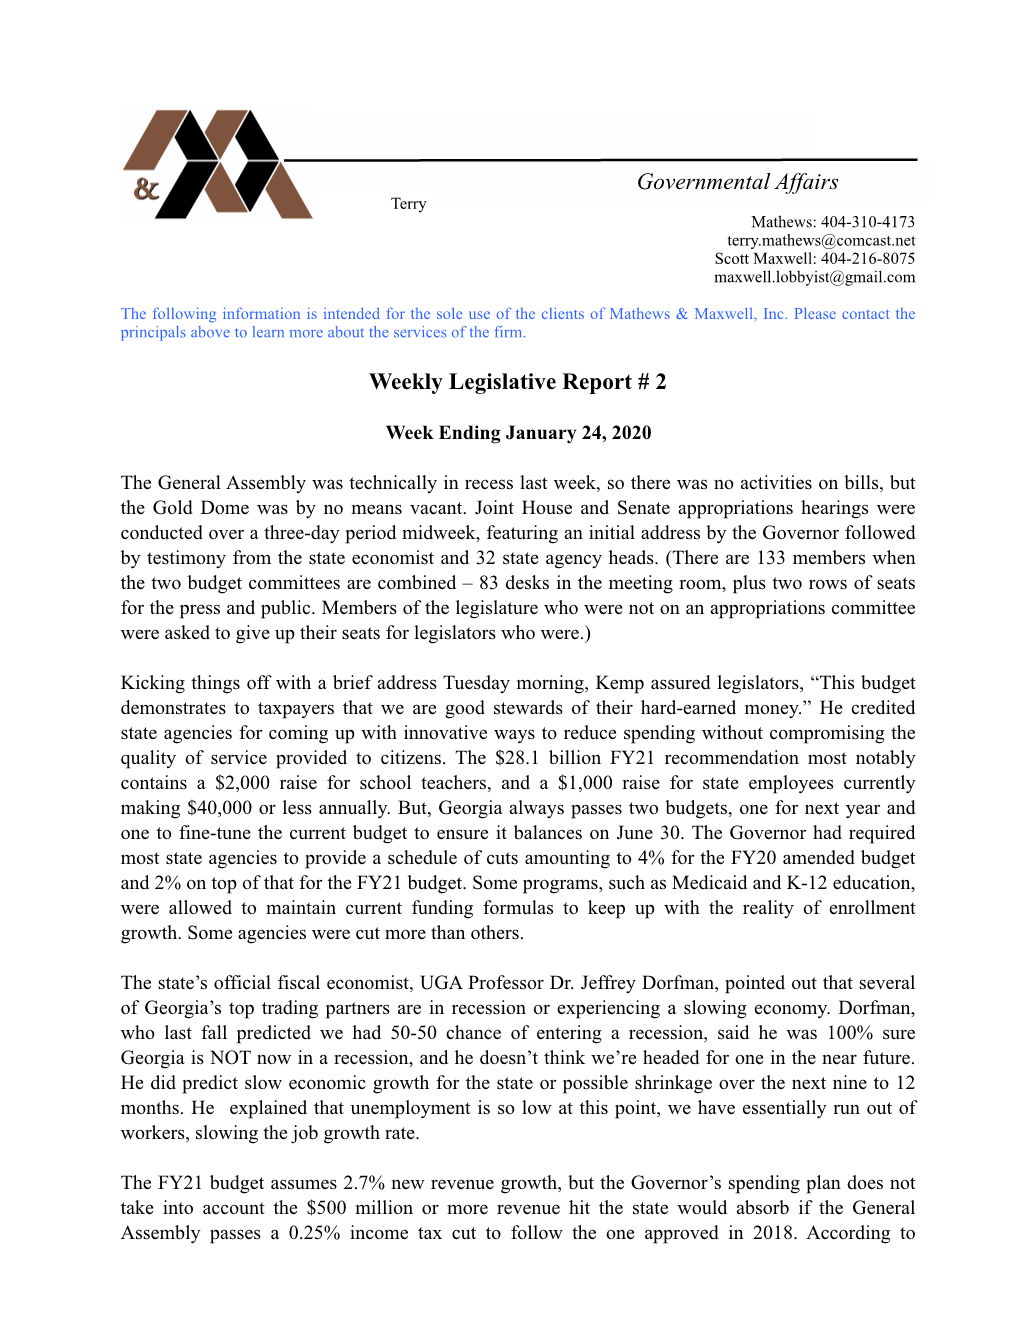 Weekly Legislative Report #2 1-24-20